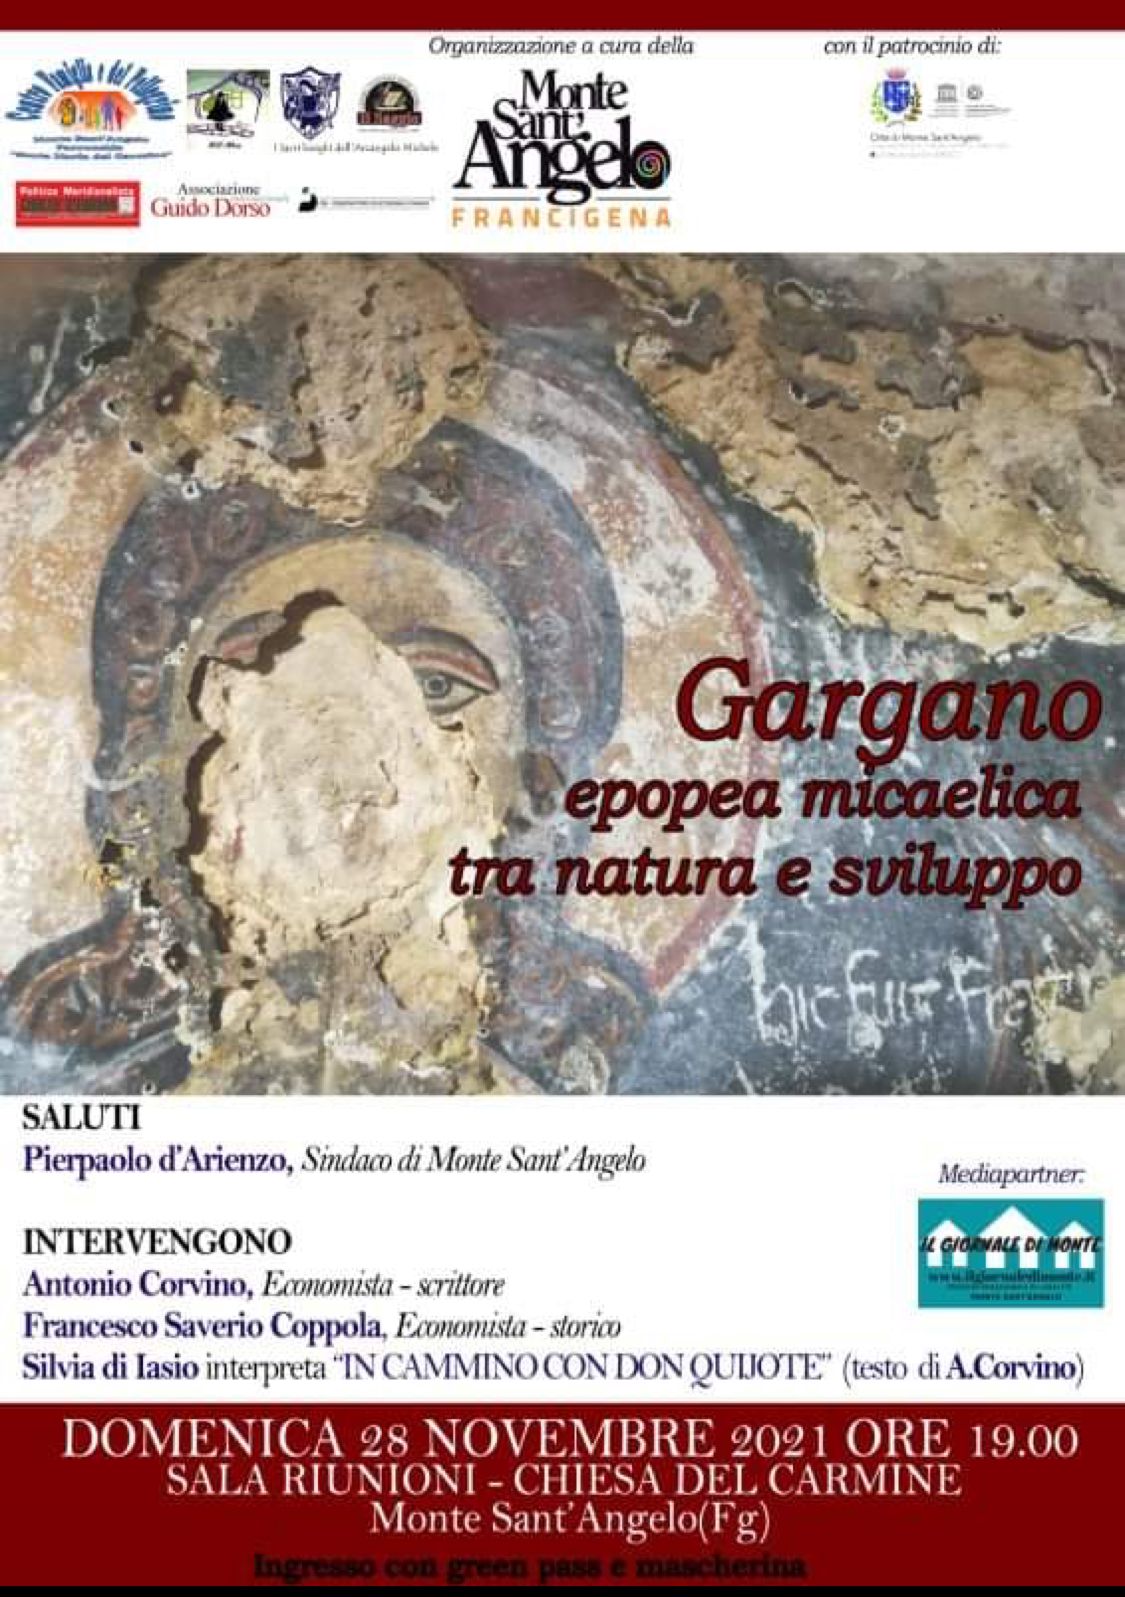 Monte Sant'Angelo, Gargano: tra natura e sviluppo